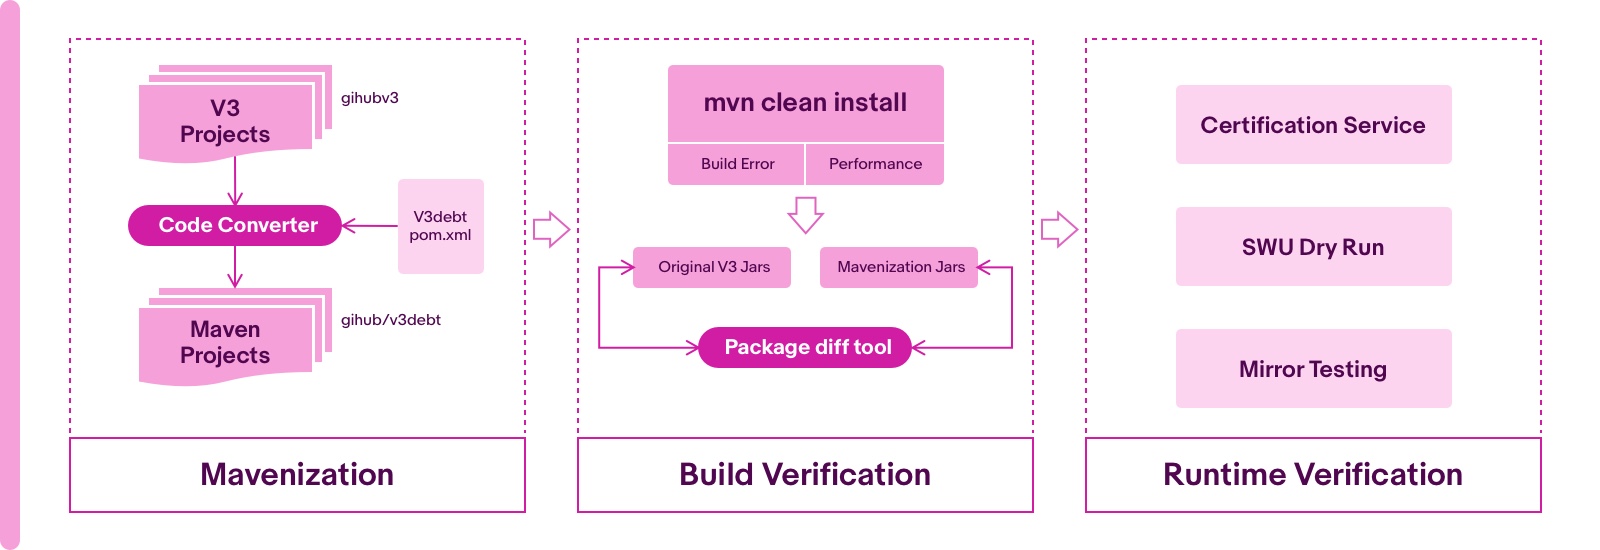 A graphic depicting mavenization, build verification and runtime verification